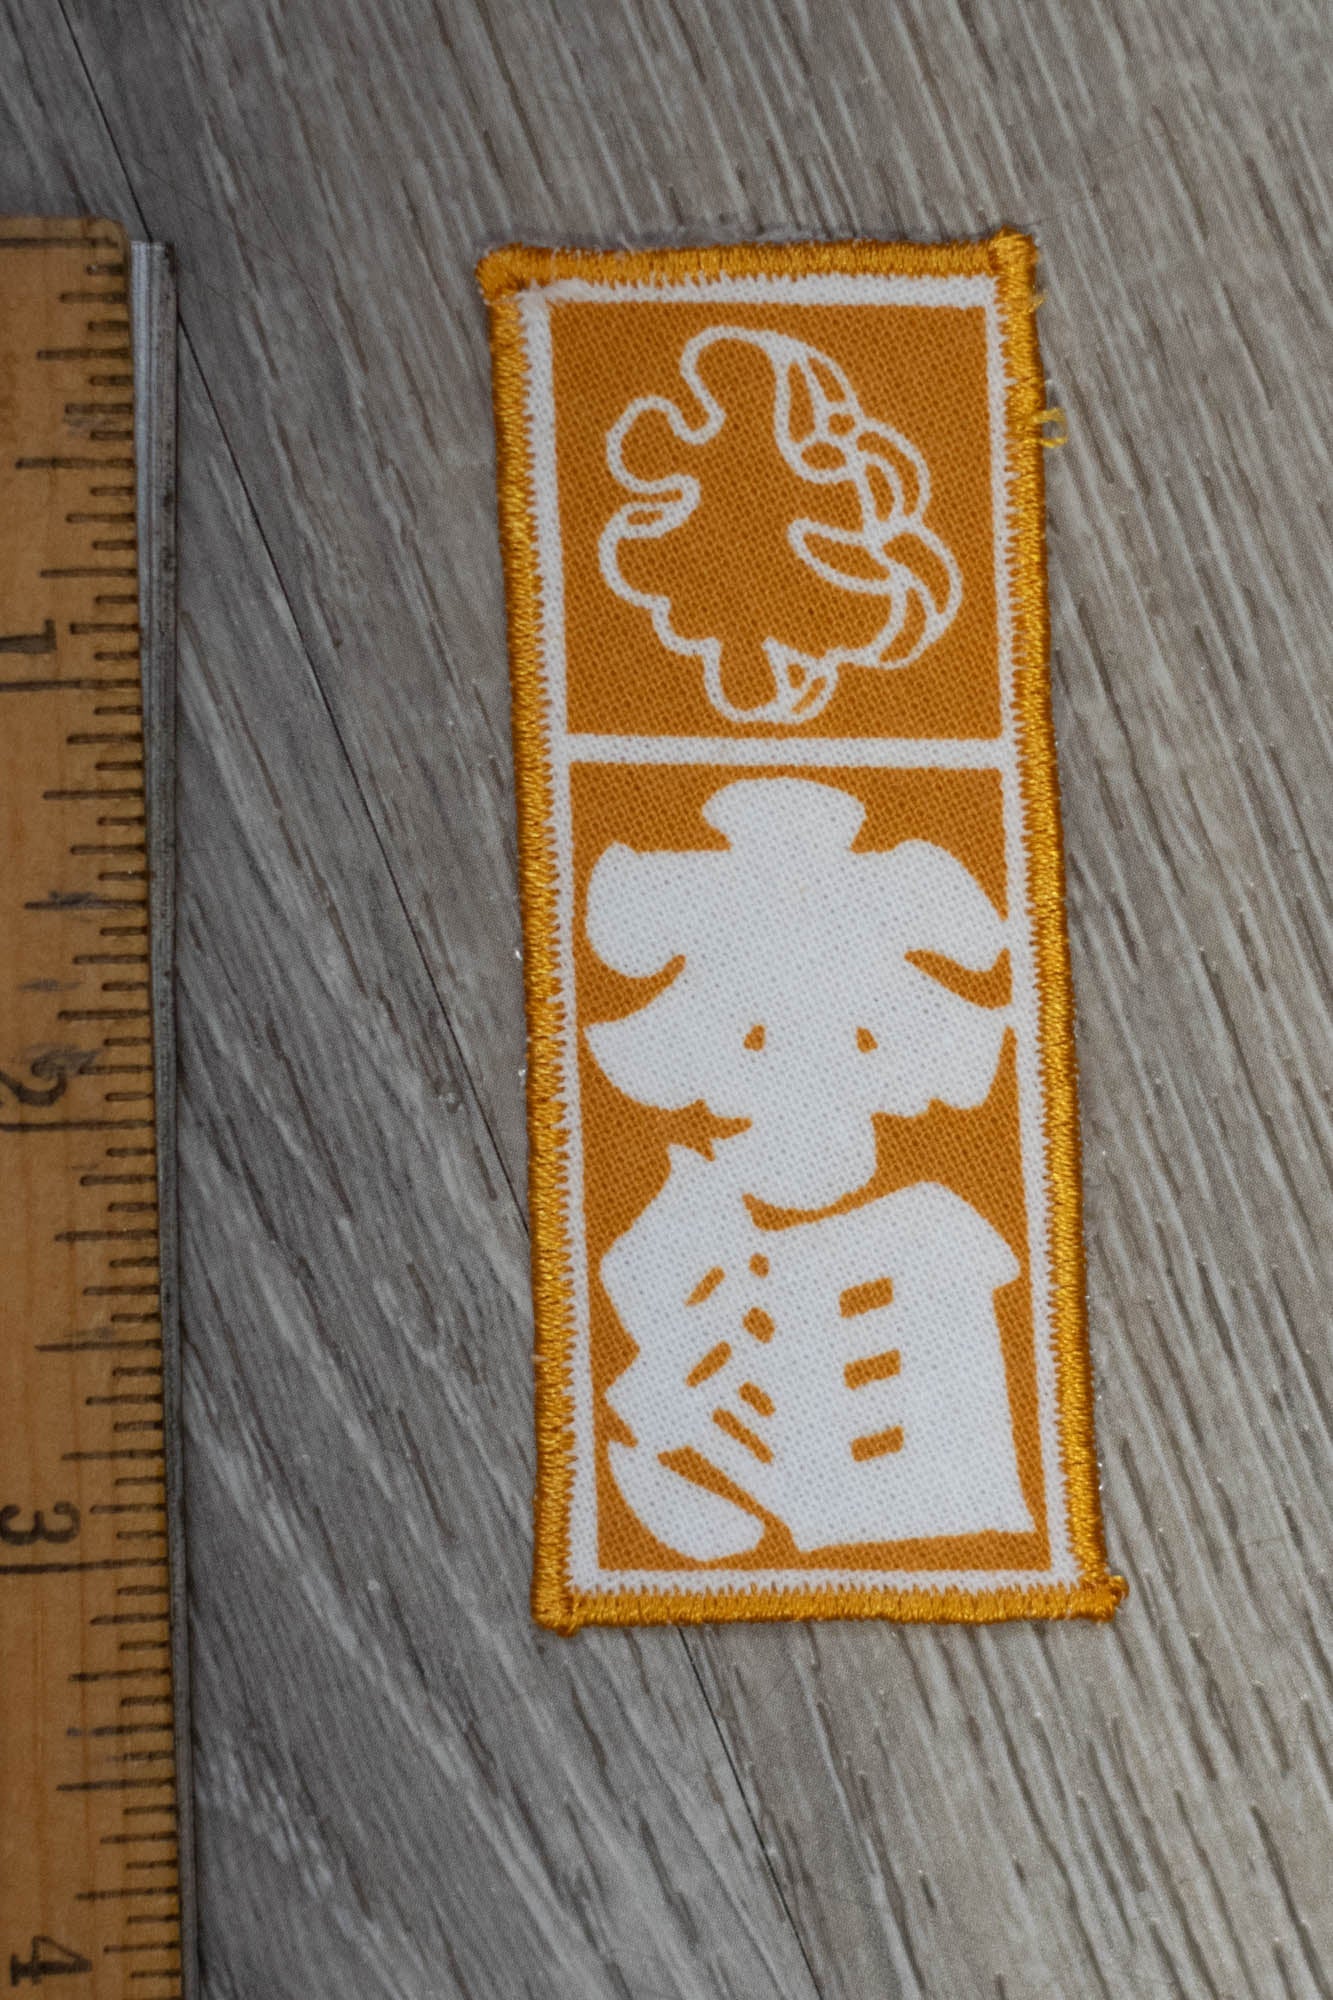 Japanese Edo Period Firefighter Company Patch/Appliqué